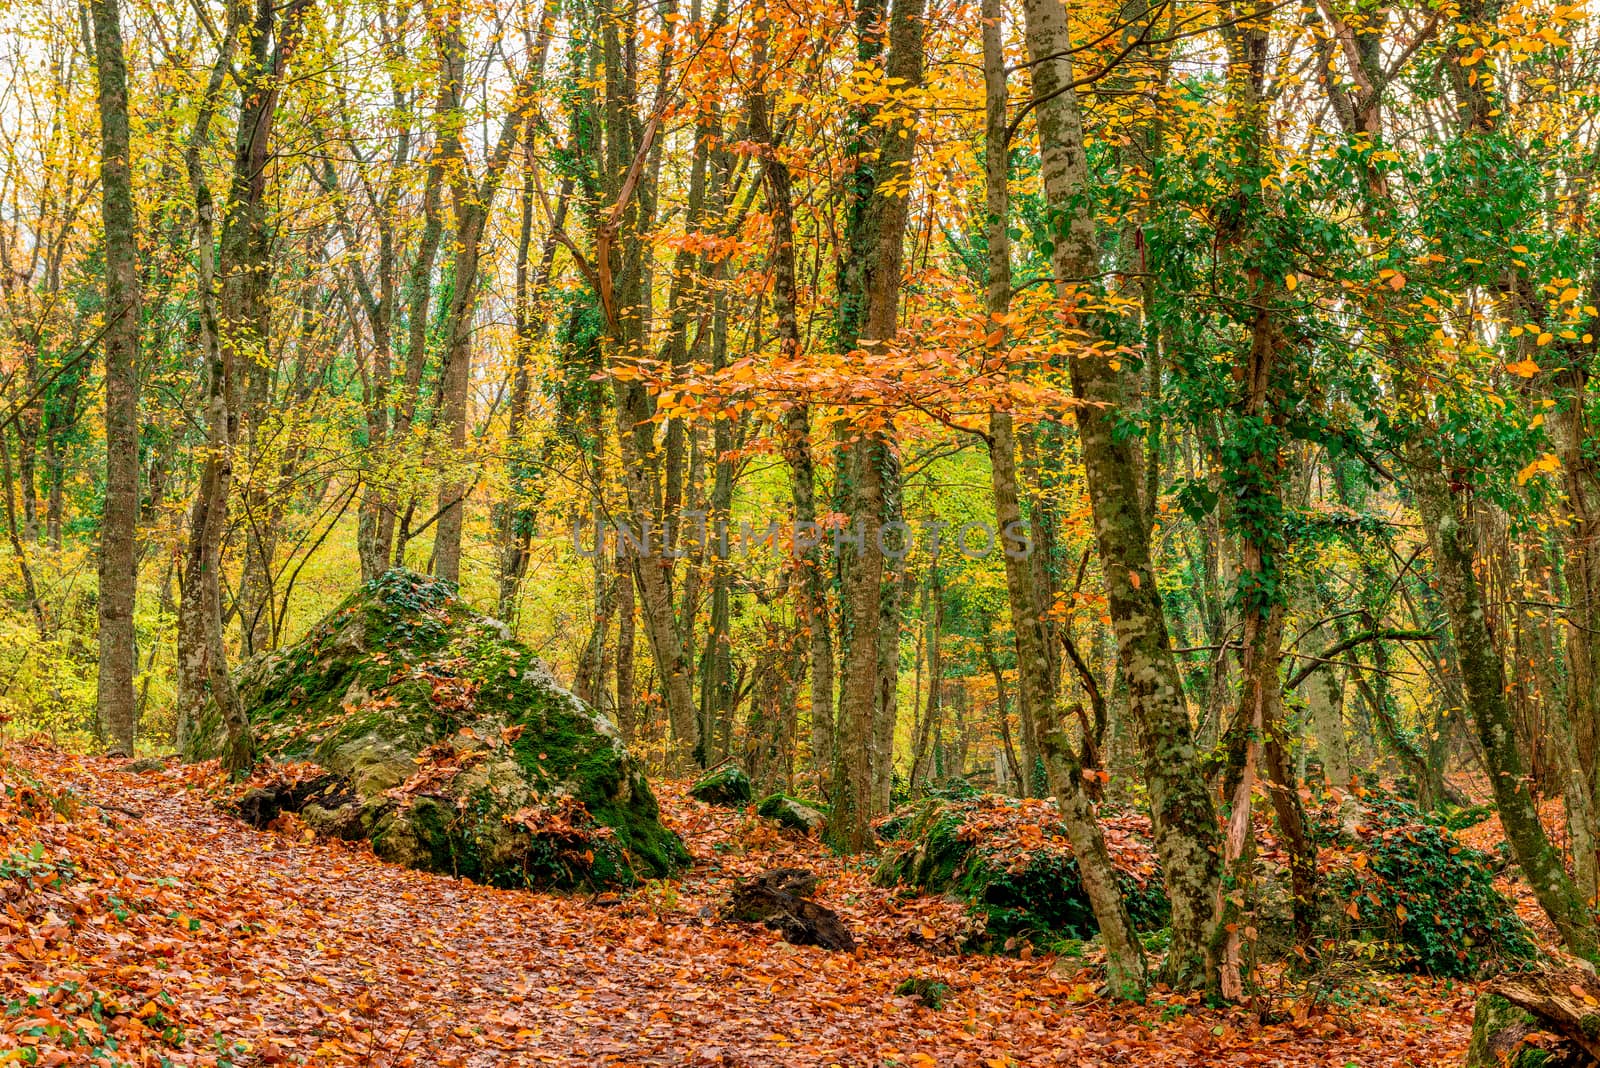 Large stones, fallen leaves - a picturesque autumn forest landsc by kosmsos111